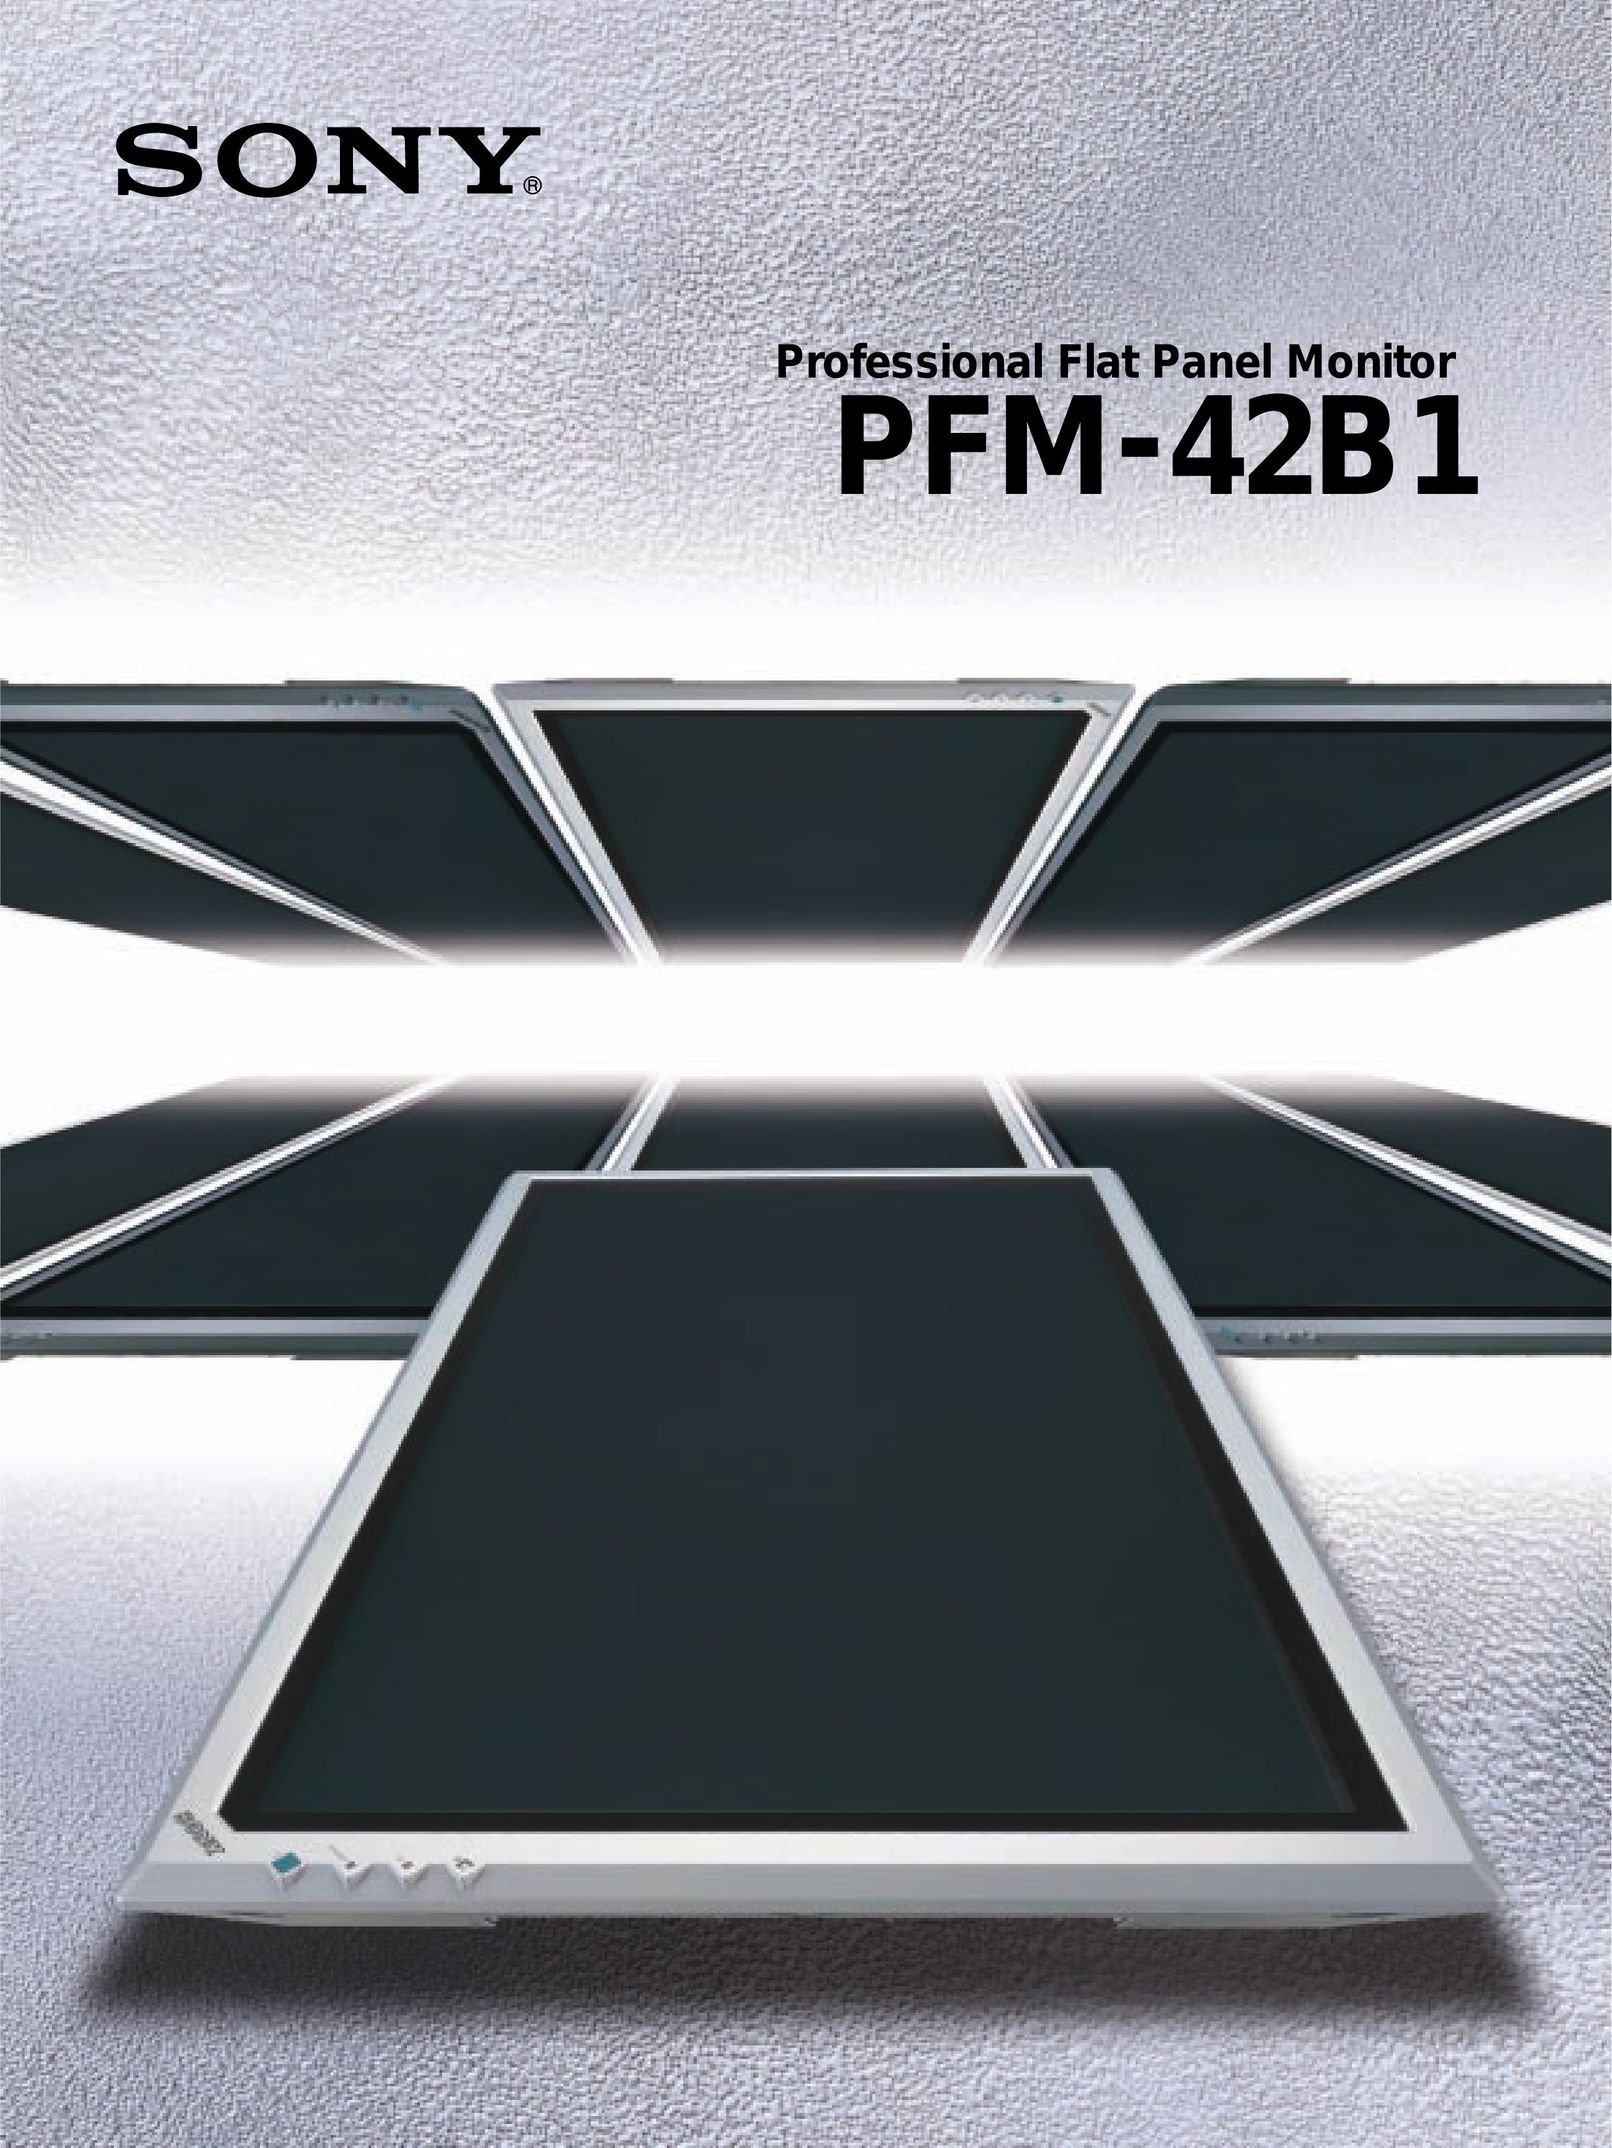 Sony PFM-42B1 Home Theater Screen User Manual